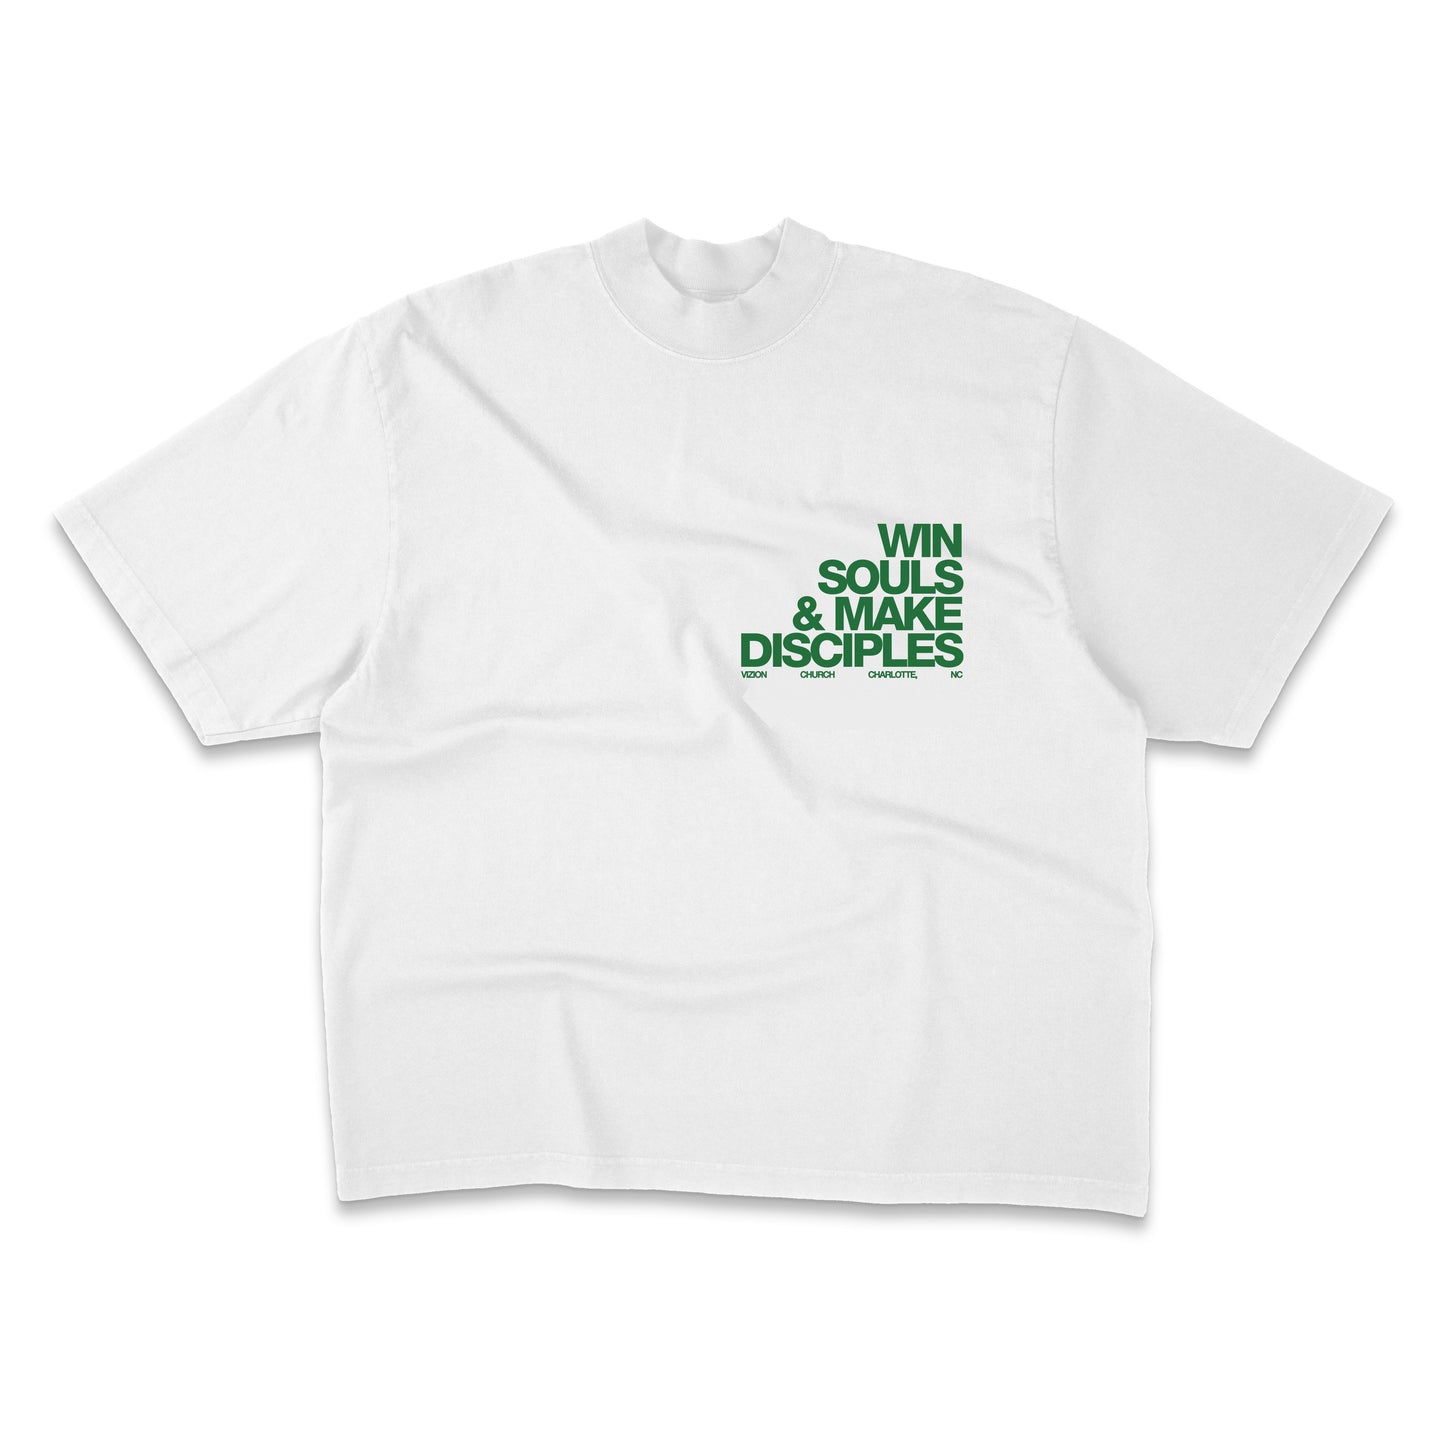 Win Souls & Make Disciples T-Shirt